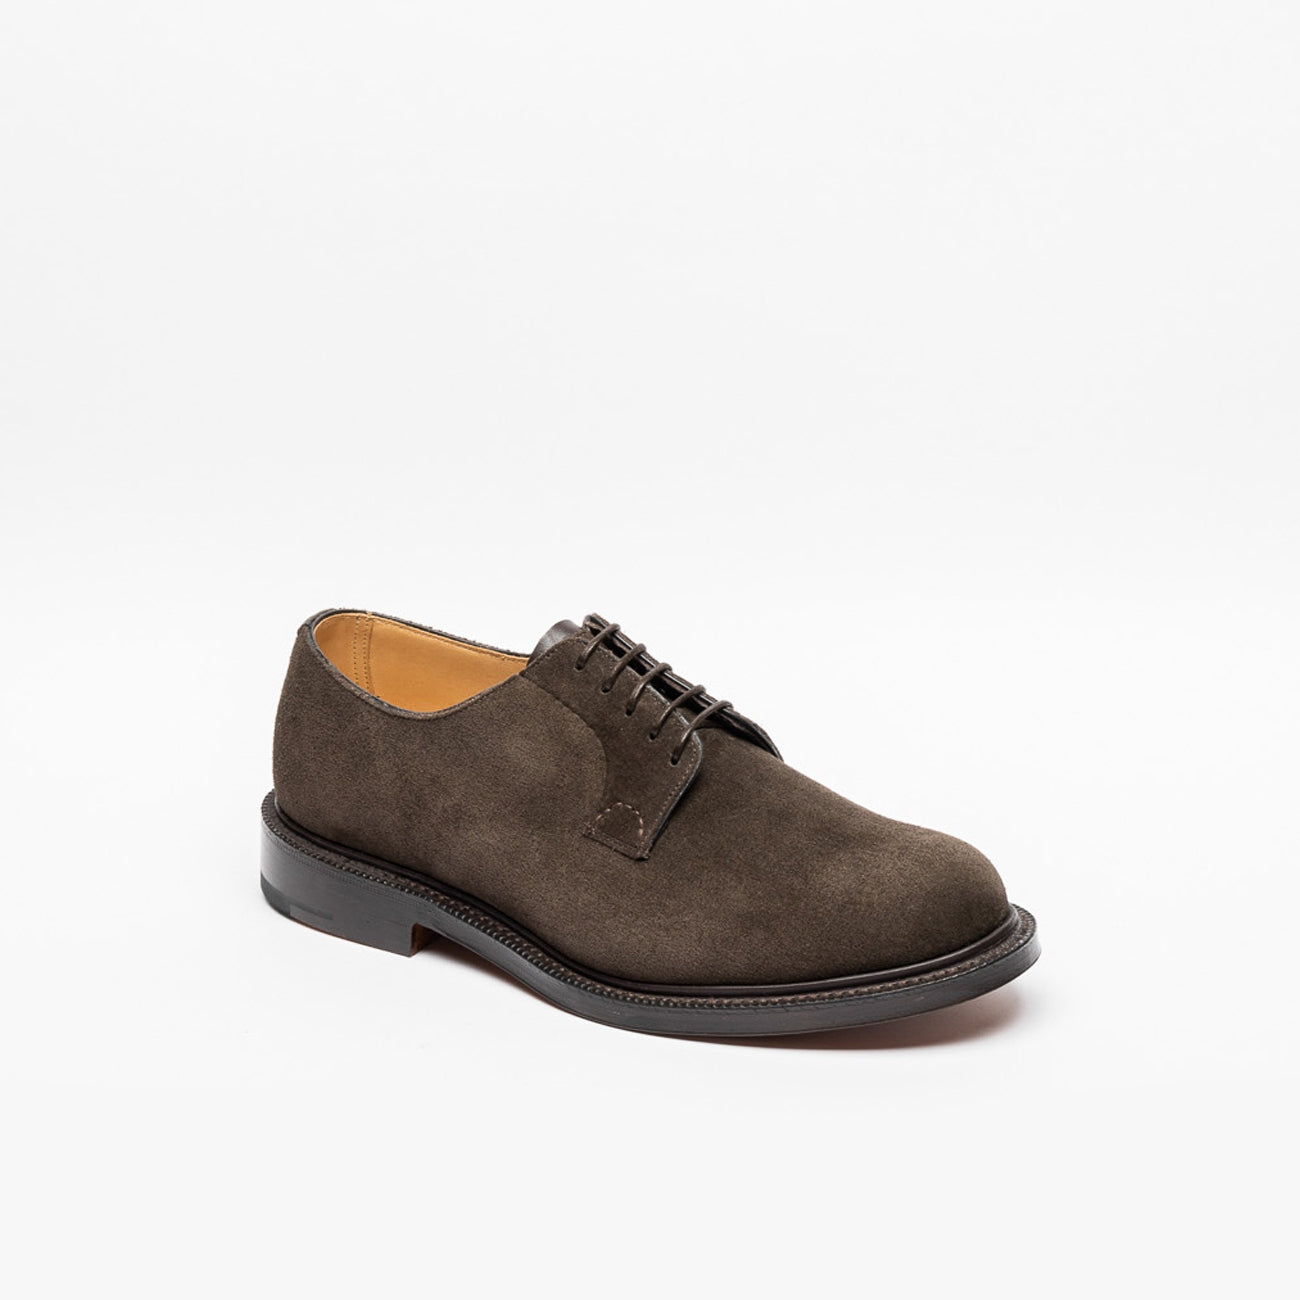 Church's brown castoro suede shoe